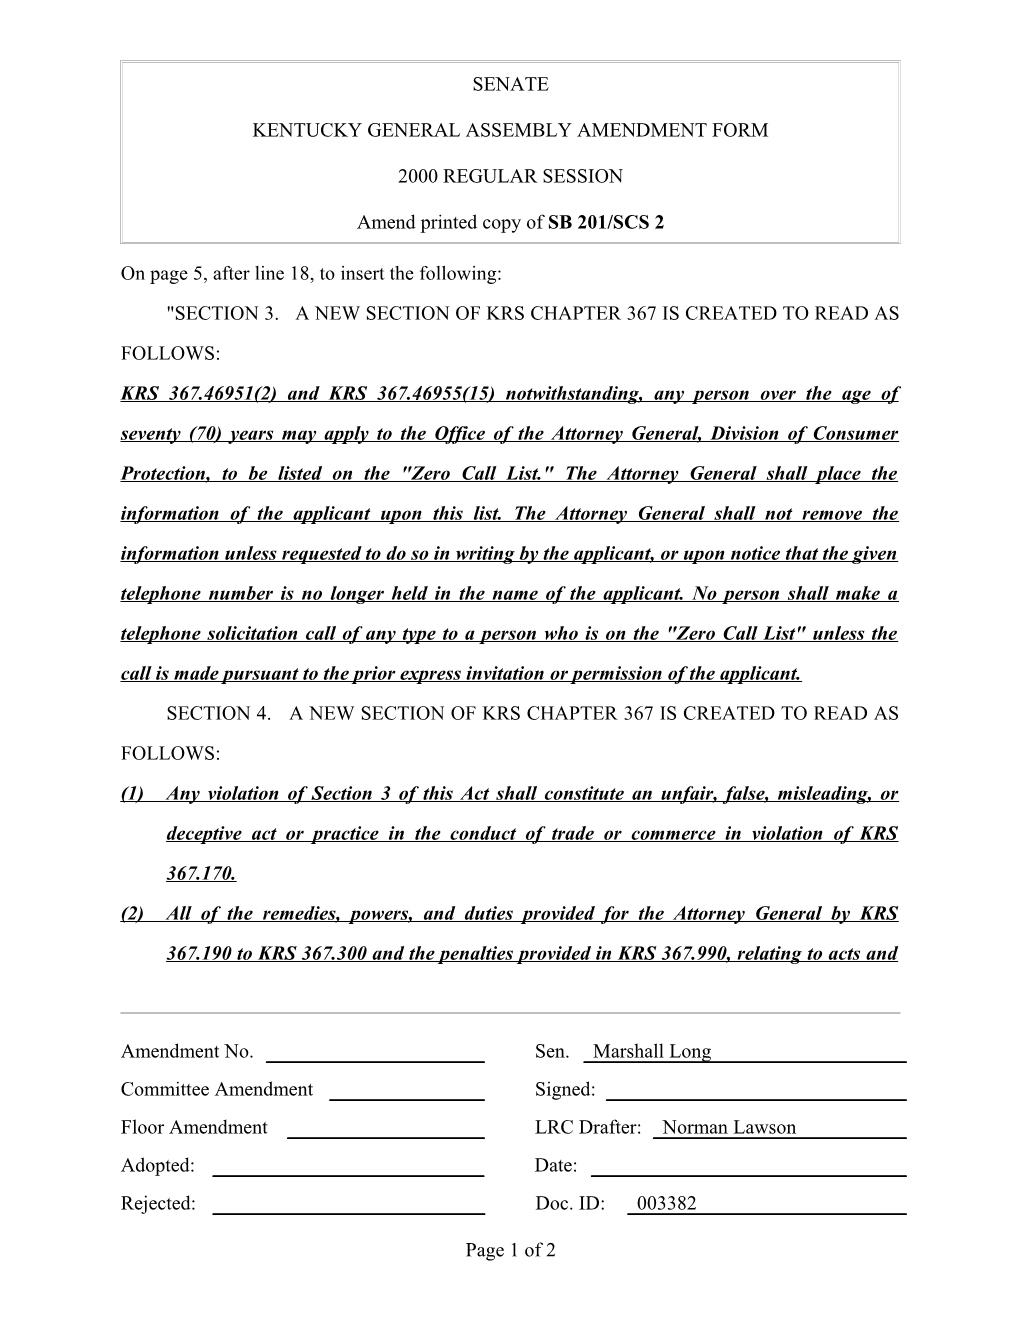 Kentucky General Assembly Amendment Form s12